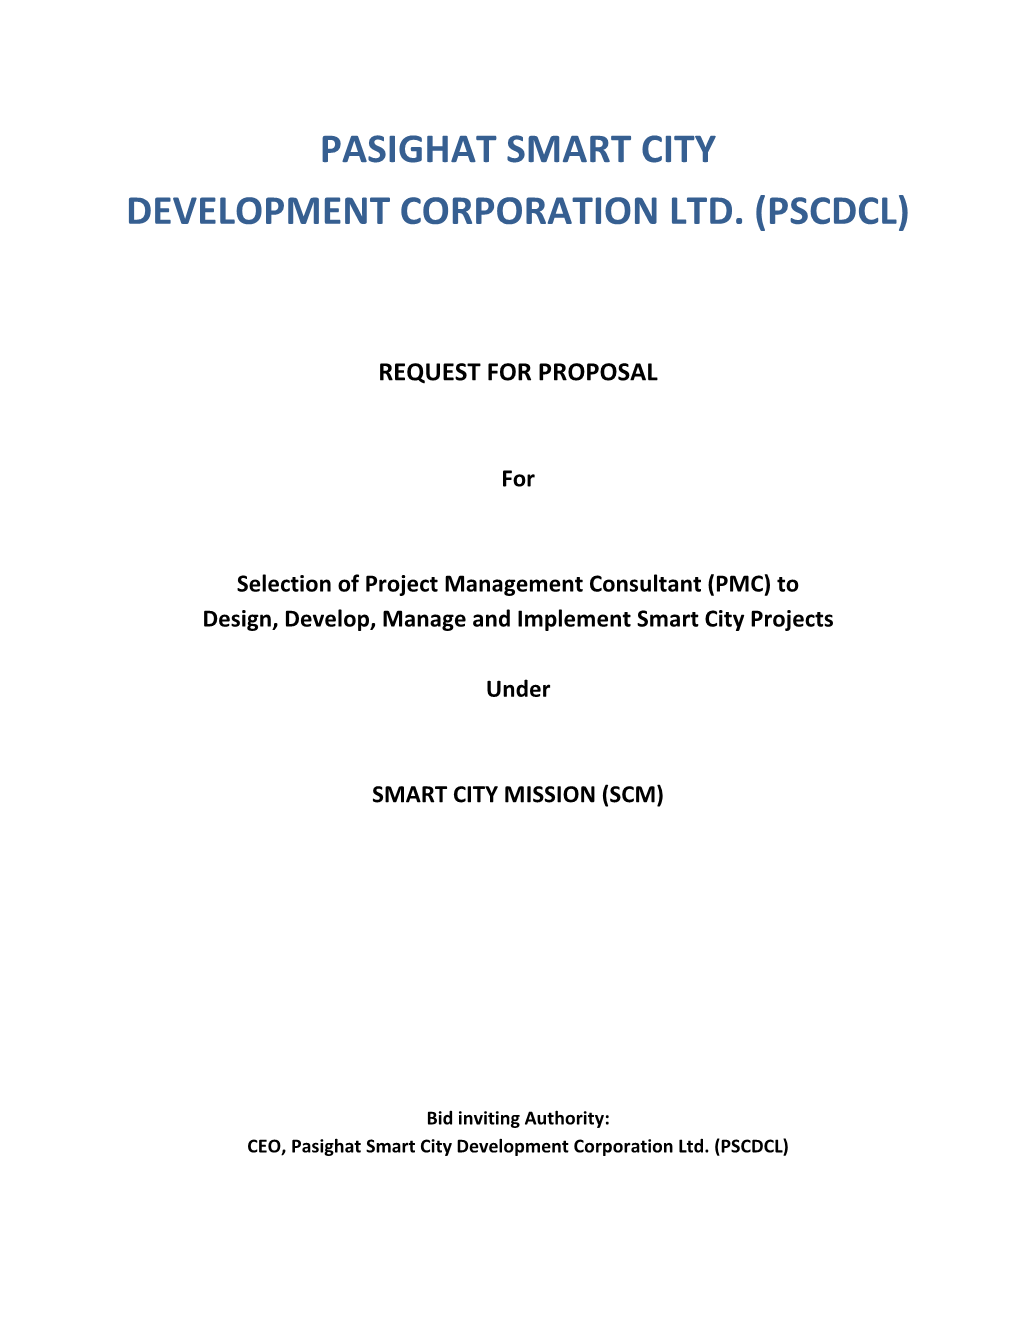 Pasighat Smart City Development Corporation Ltd